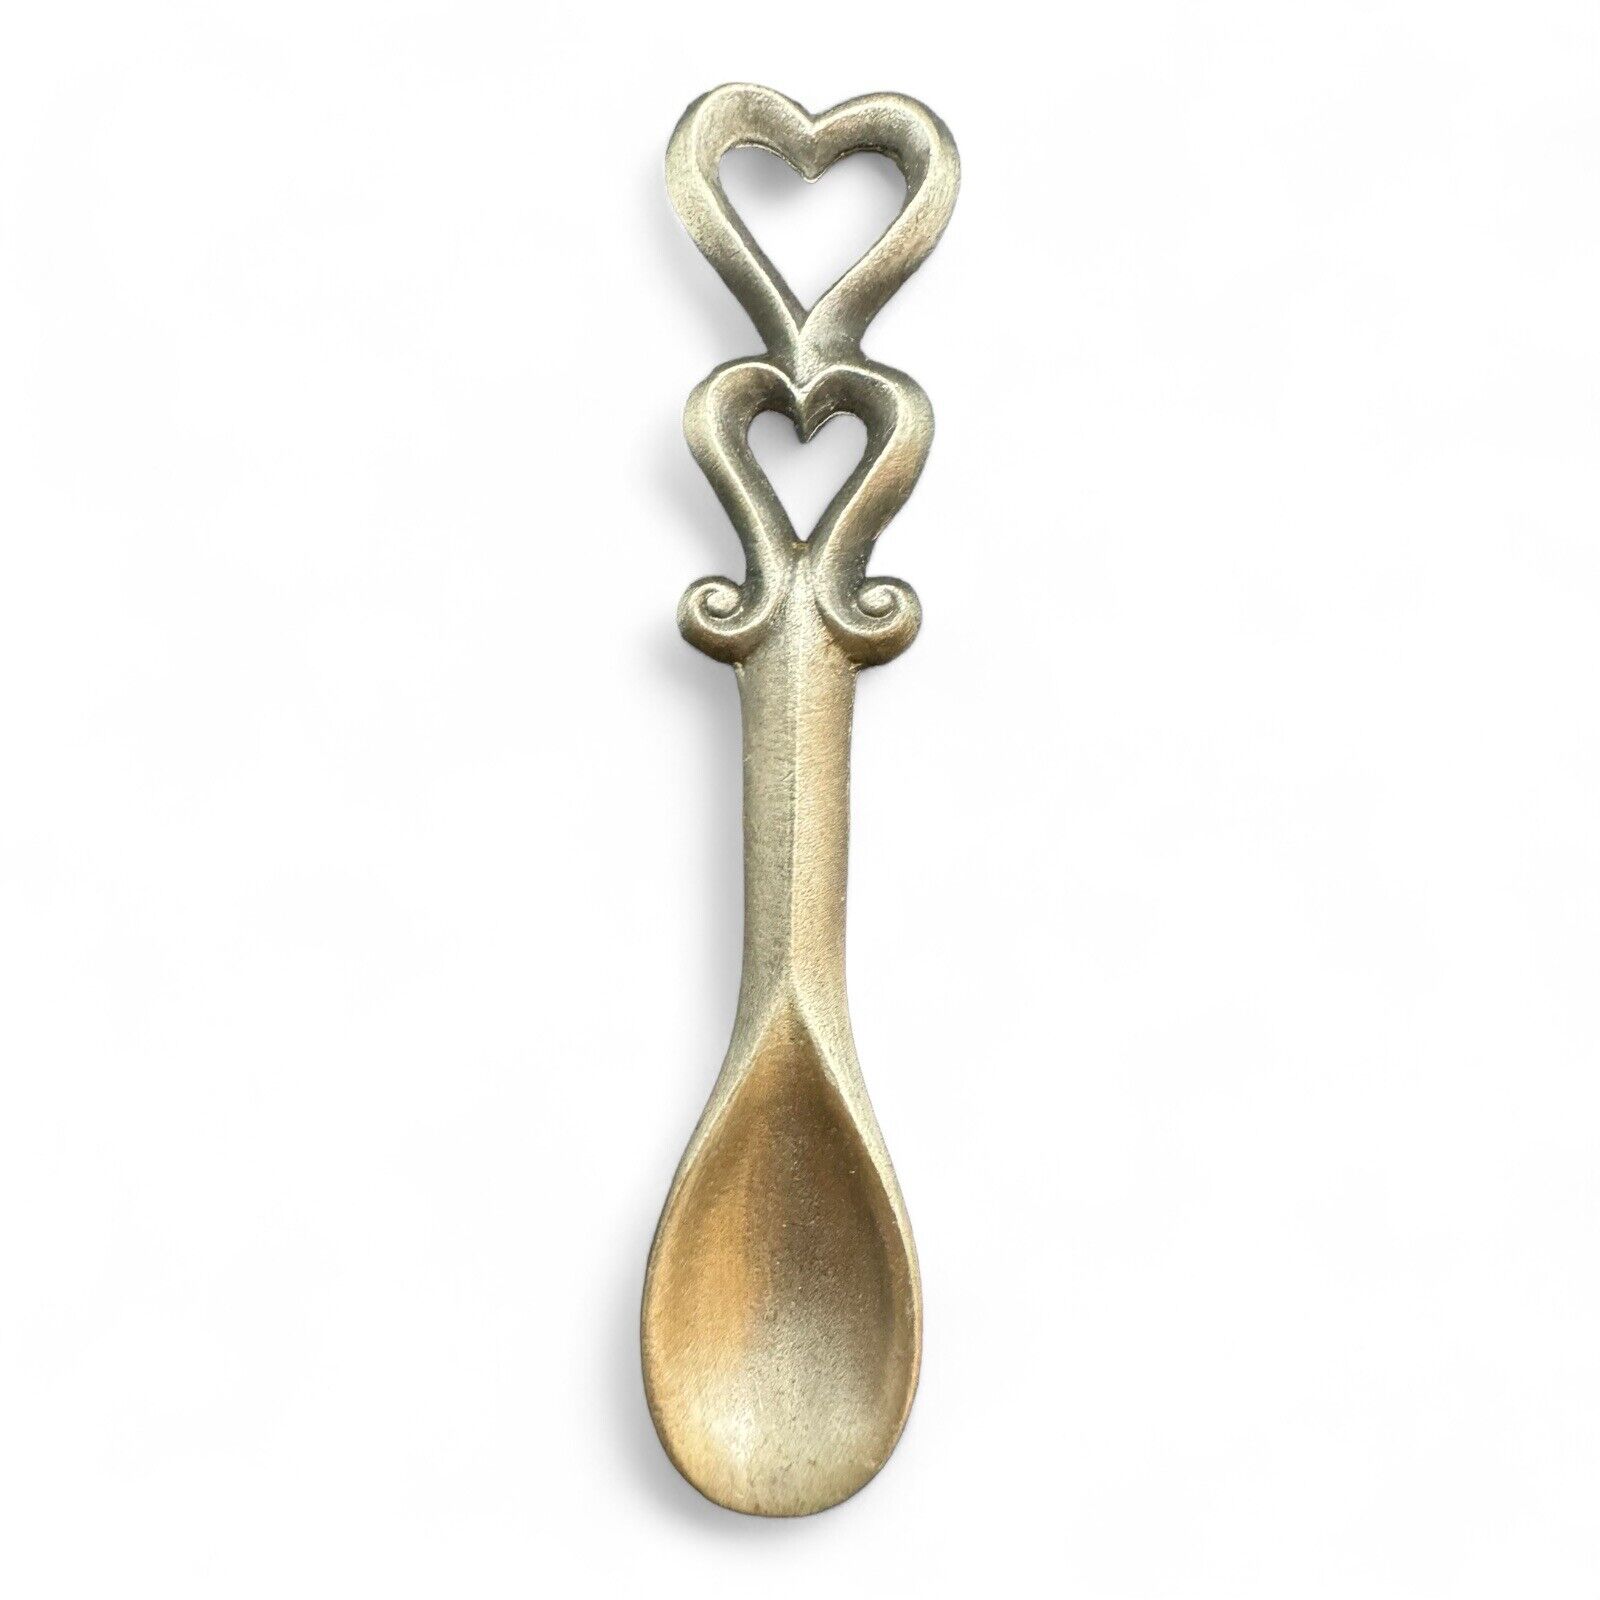 Vintage Hallmark Signed Double Heart Metal Spoon Brooch